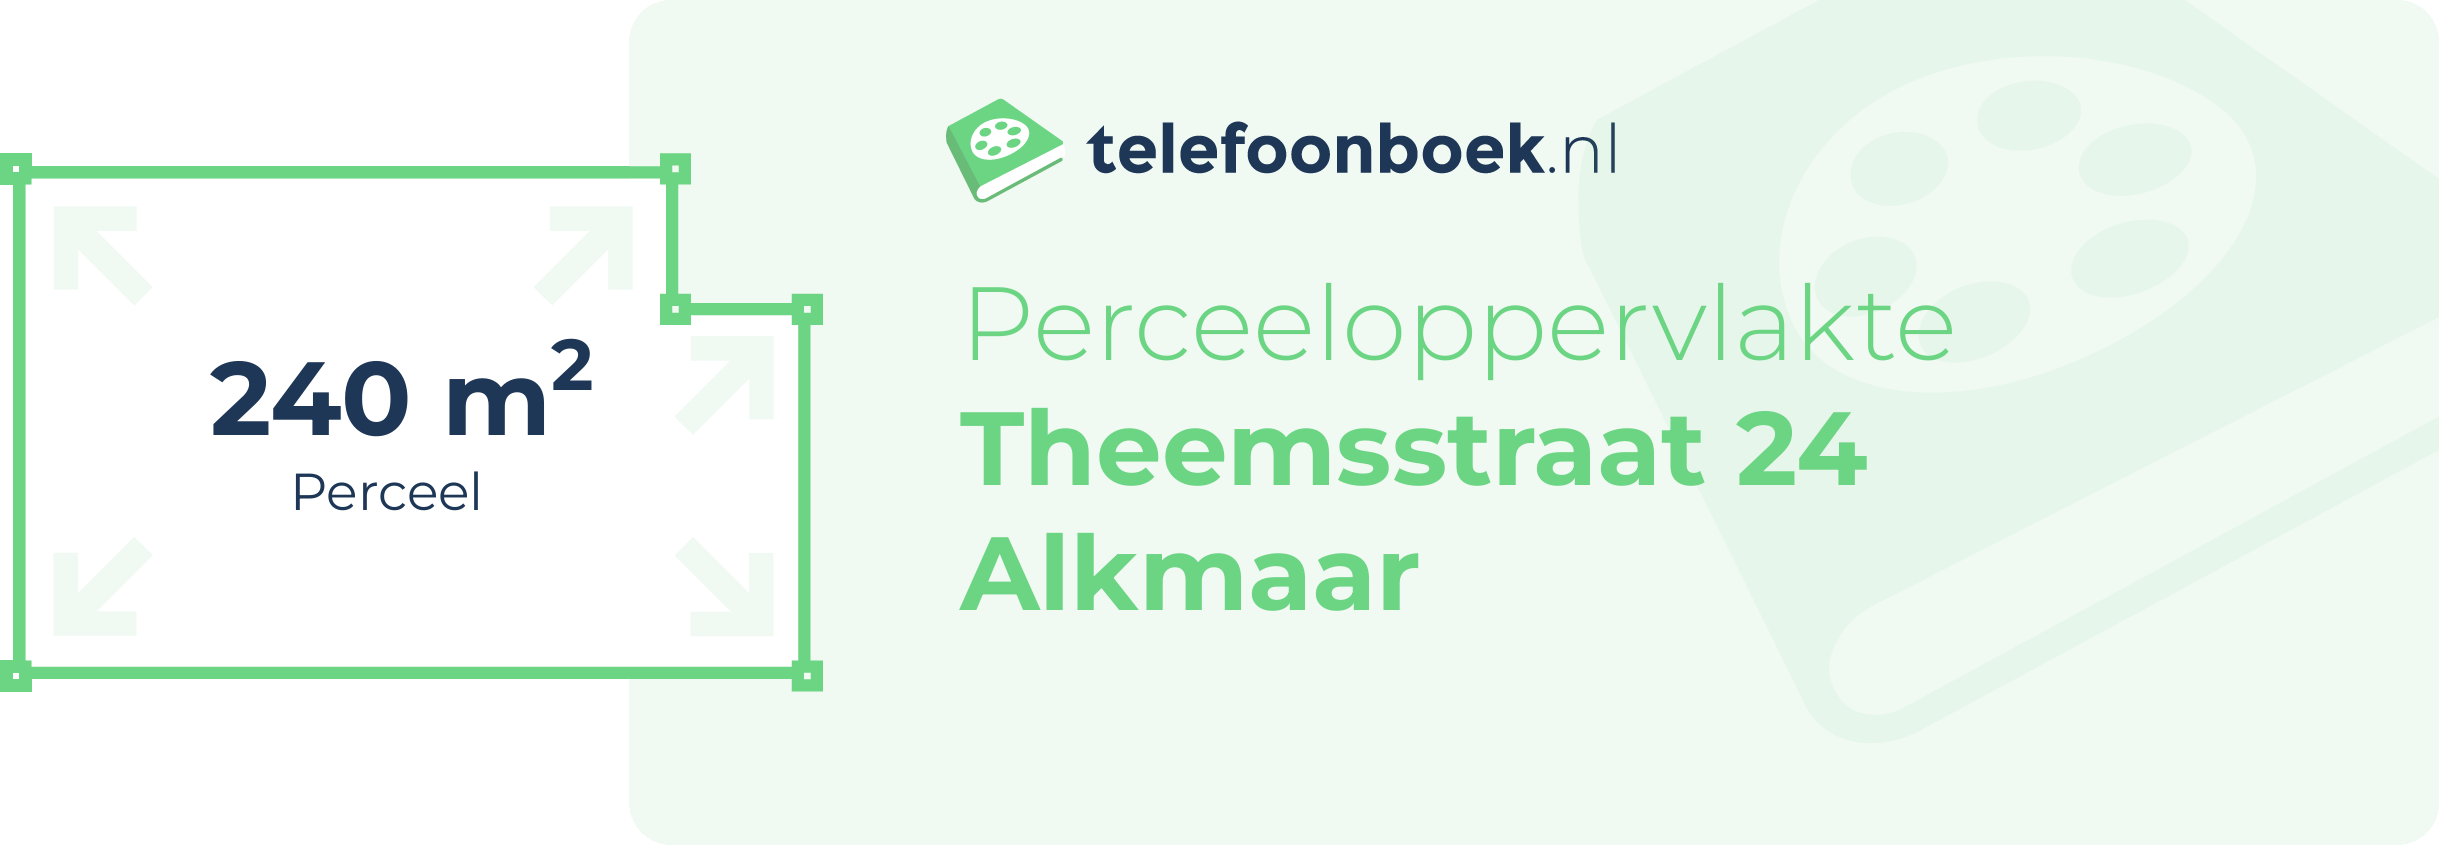 Perceeloppervlakte Theemsstraat 24 Alkmaar